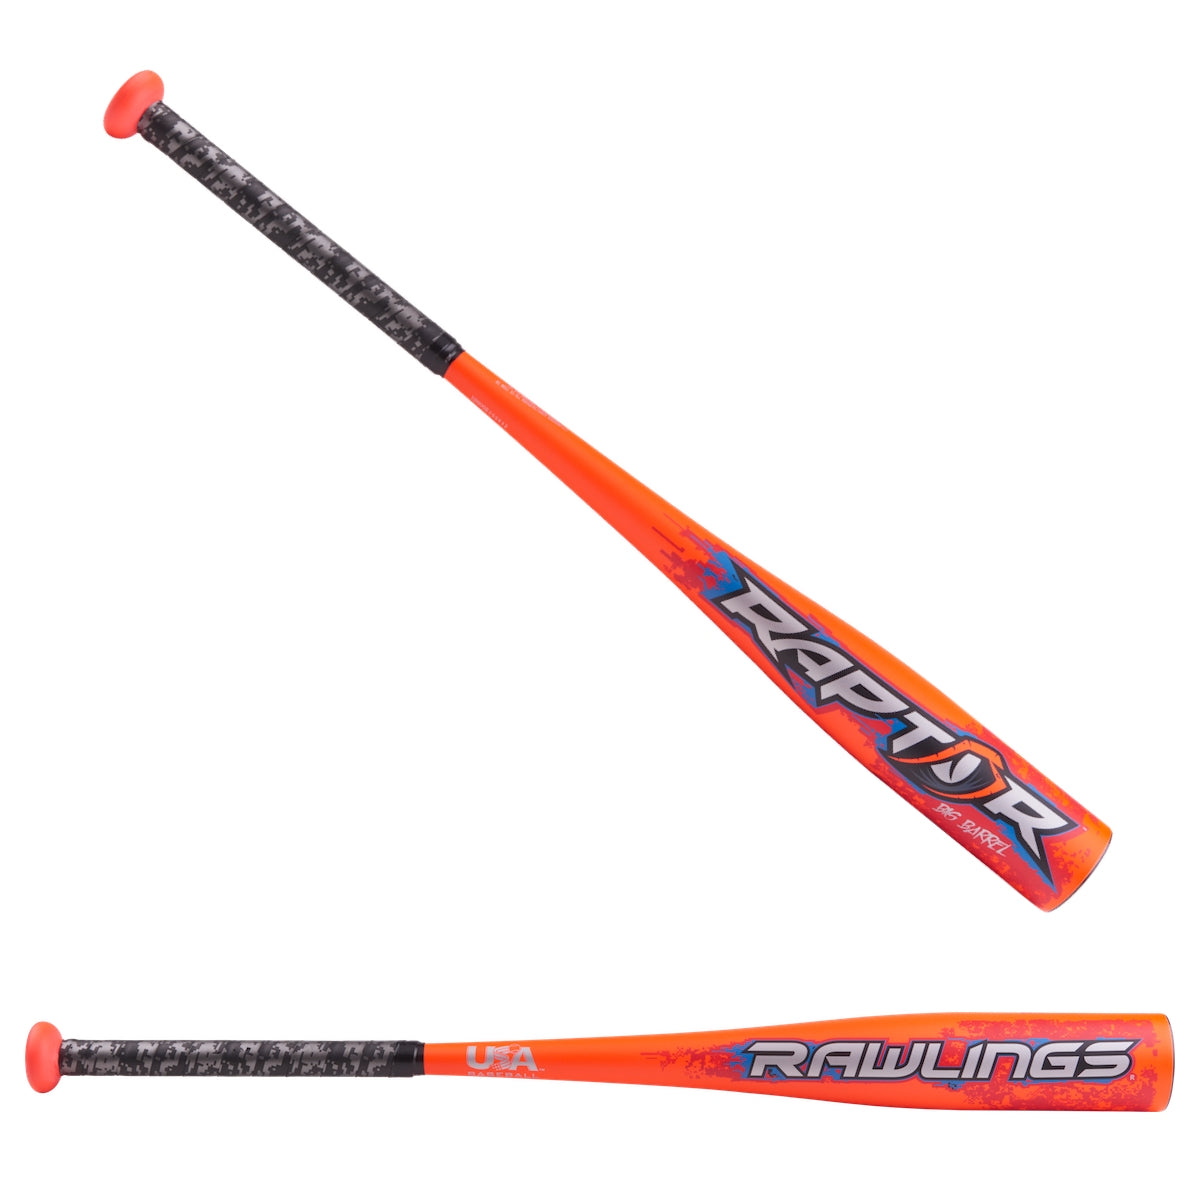 Rawlings Raptor US8R8 Big Barrel Baseball Bat - Drop 8